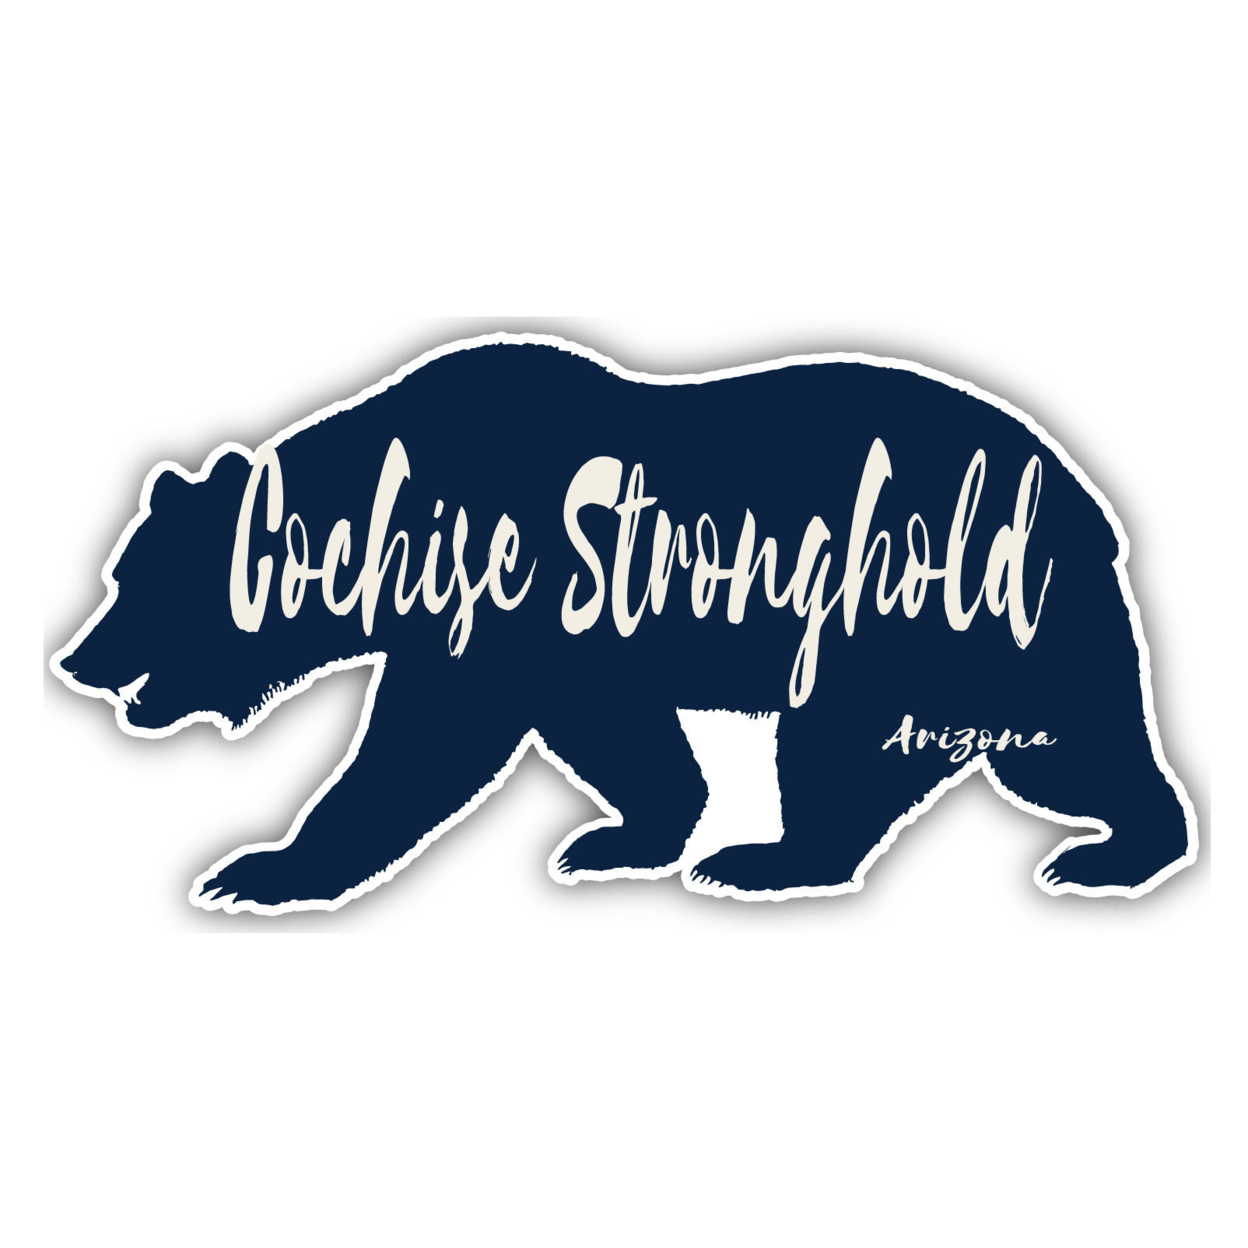 Cochise Stronghold Arizona Souvenir Decorative Stickers (Choose Theme And Size) - Single Unit, 6-Inch, Bear